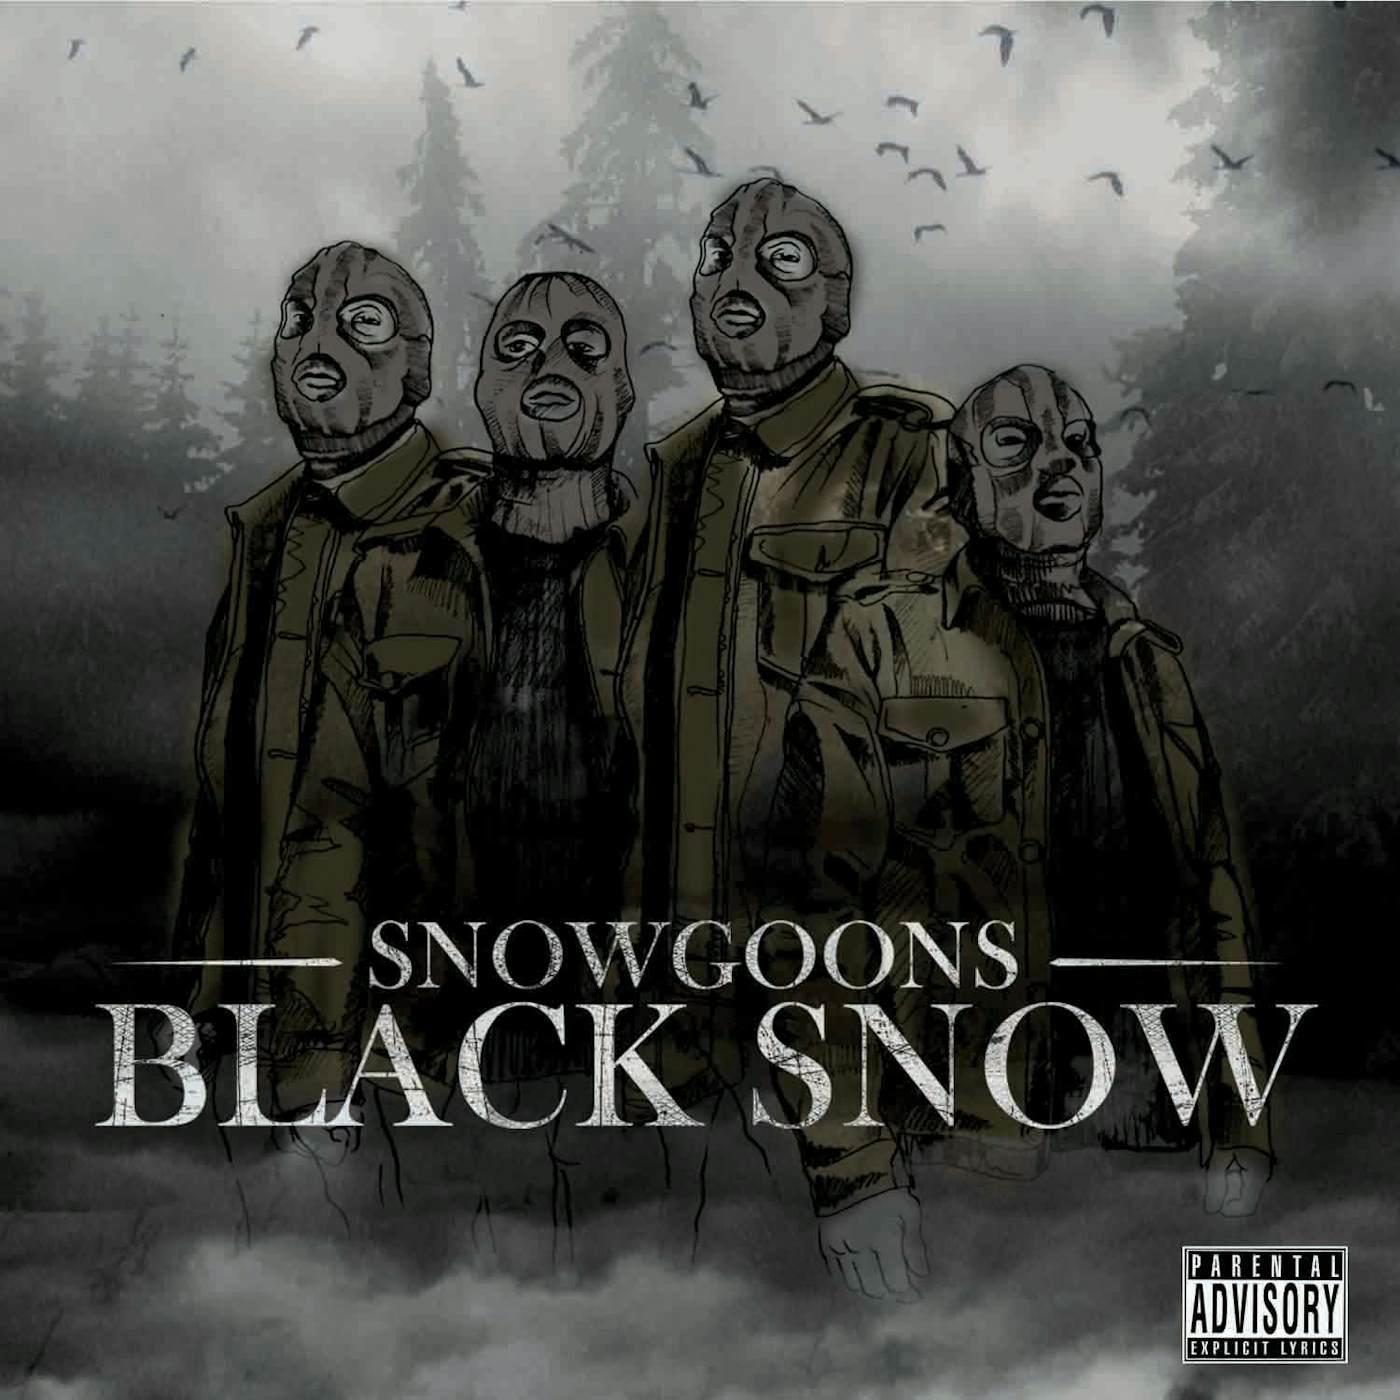 Snowgoons Black Snow Vinyl Record